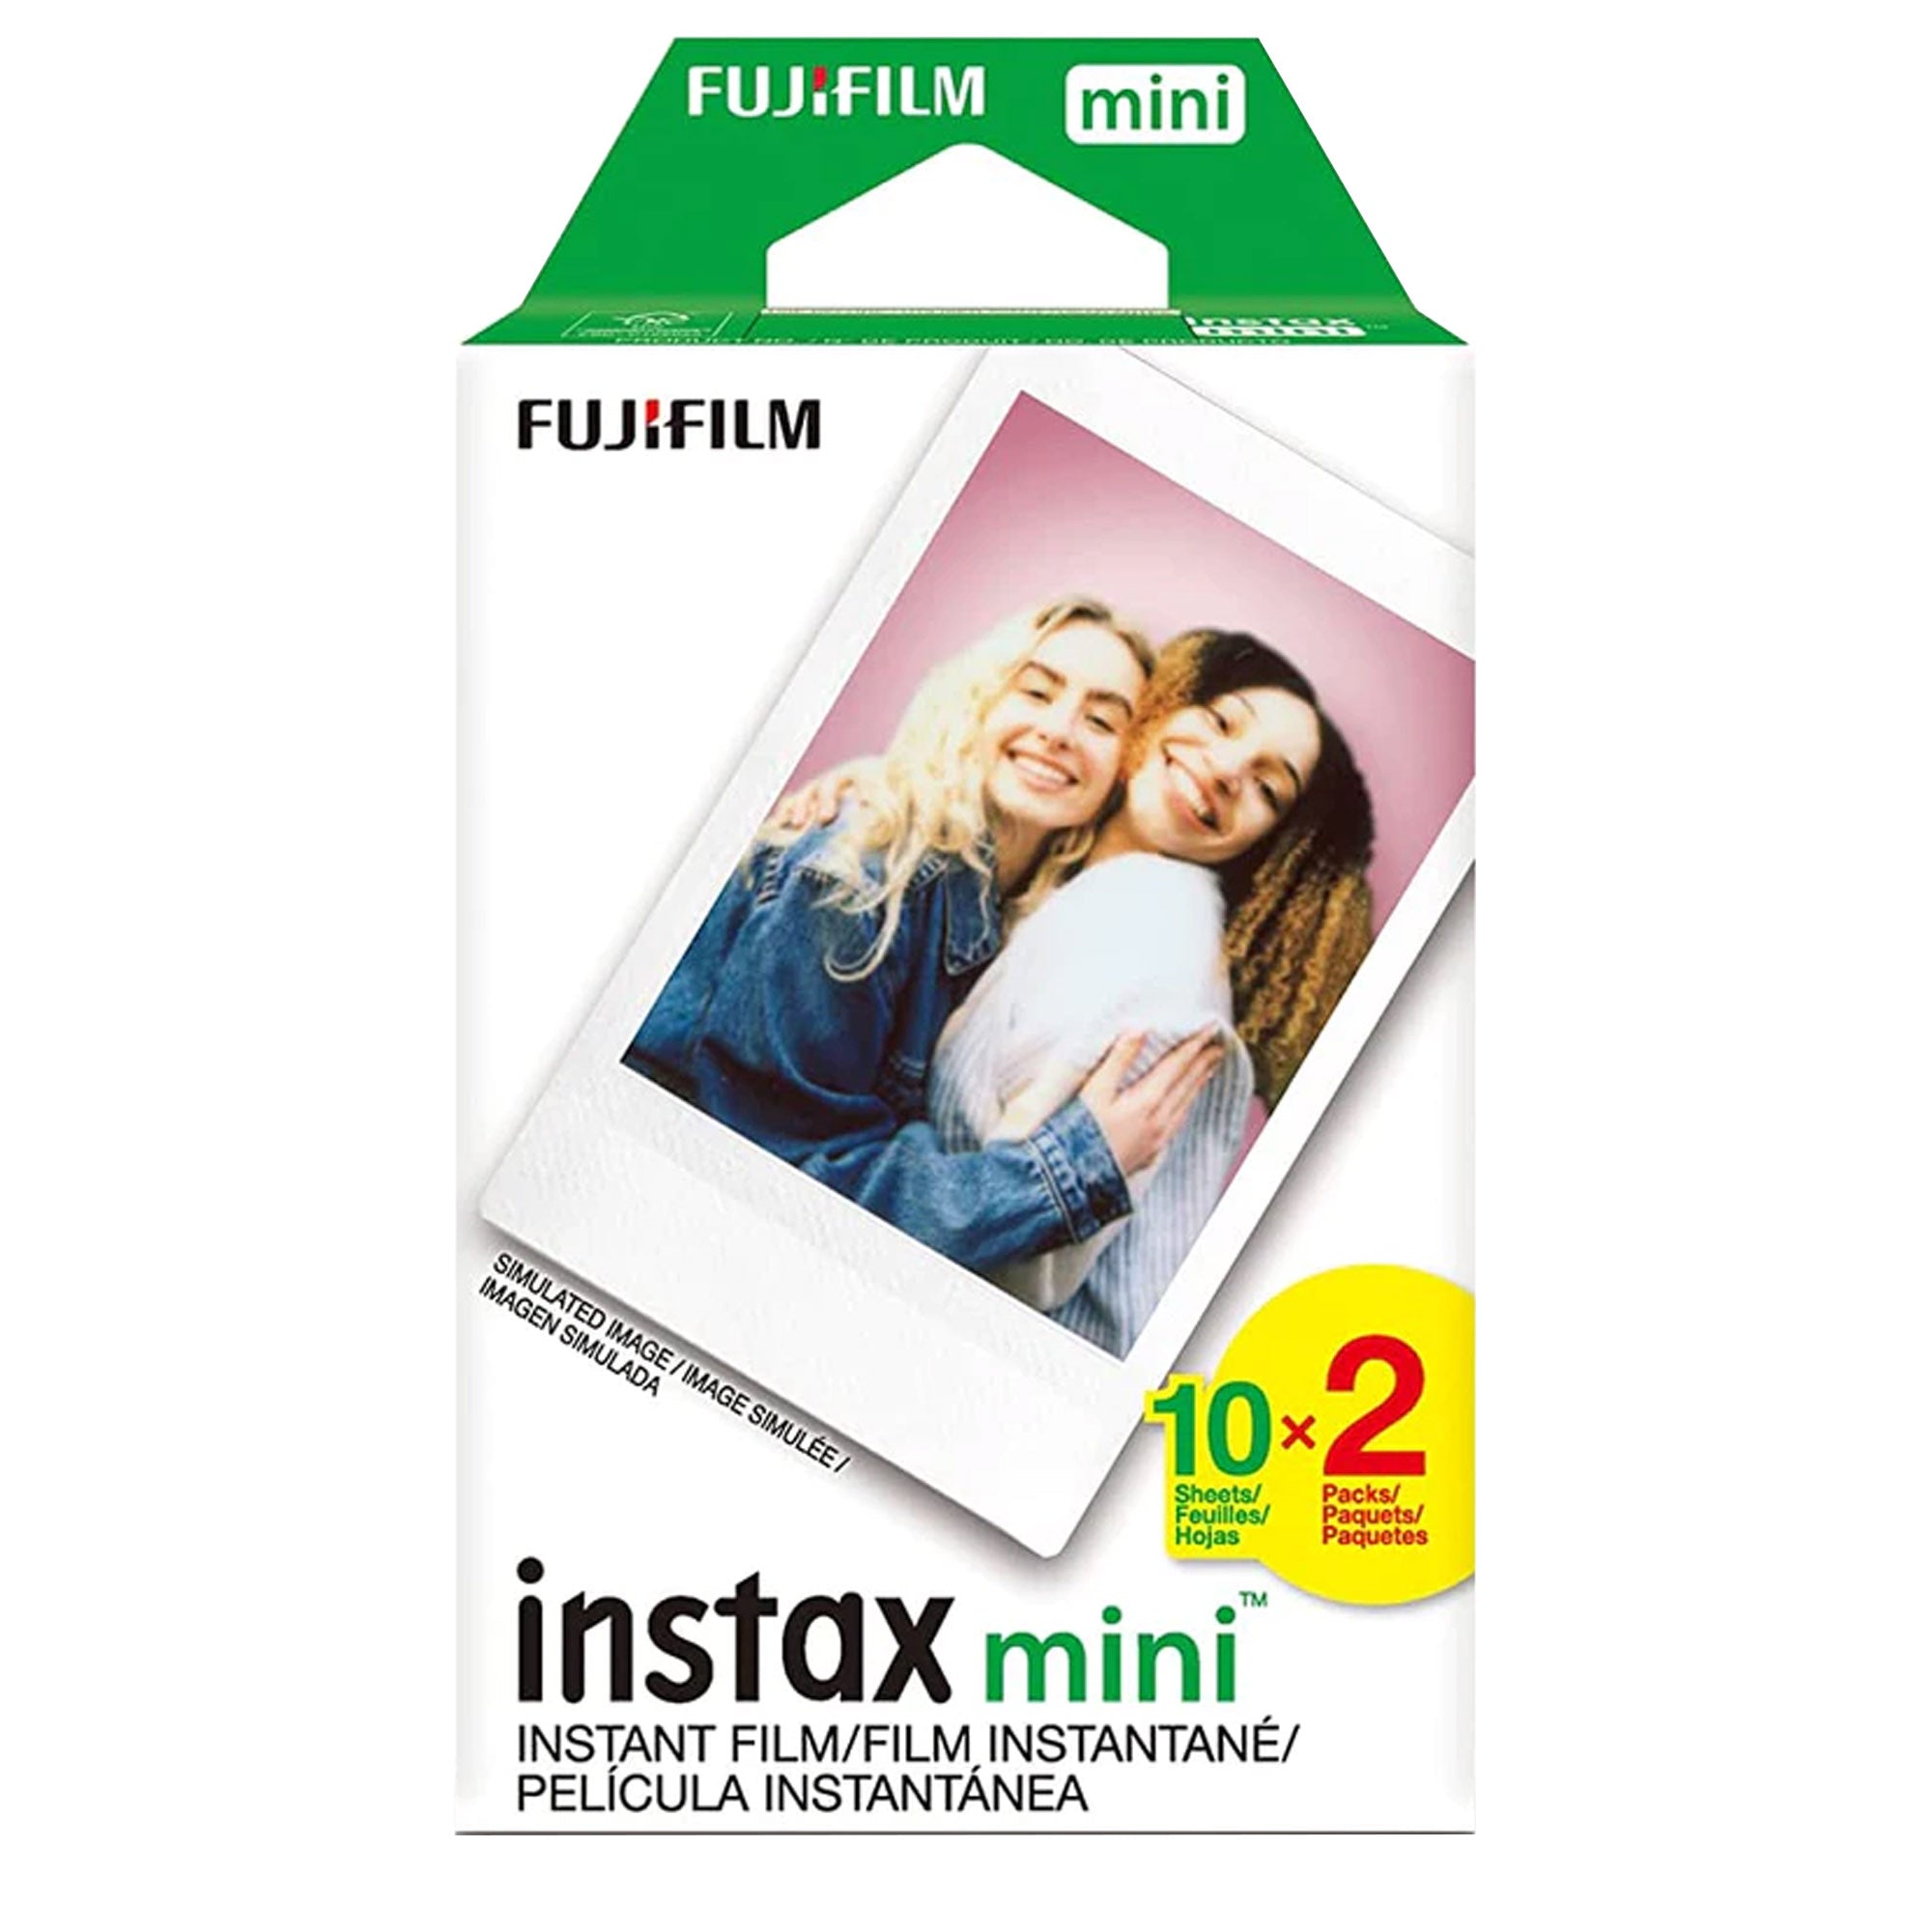 Essentials Bundle for Fujifilm Instax Mini Film Camera with 40 Films + More